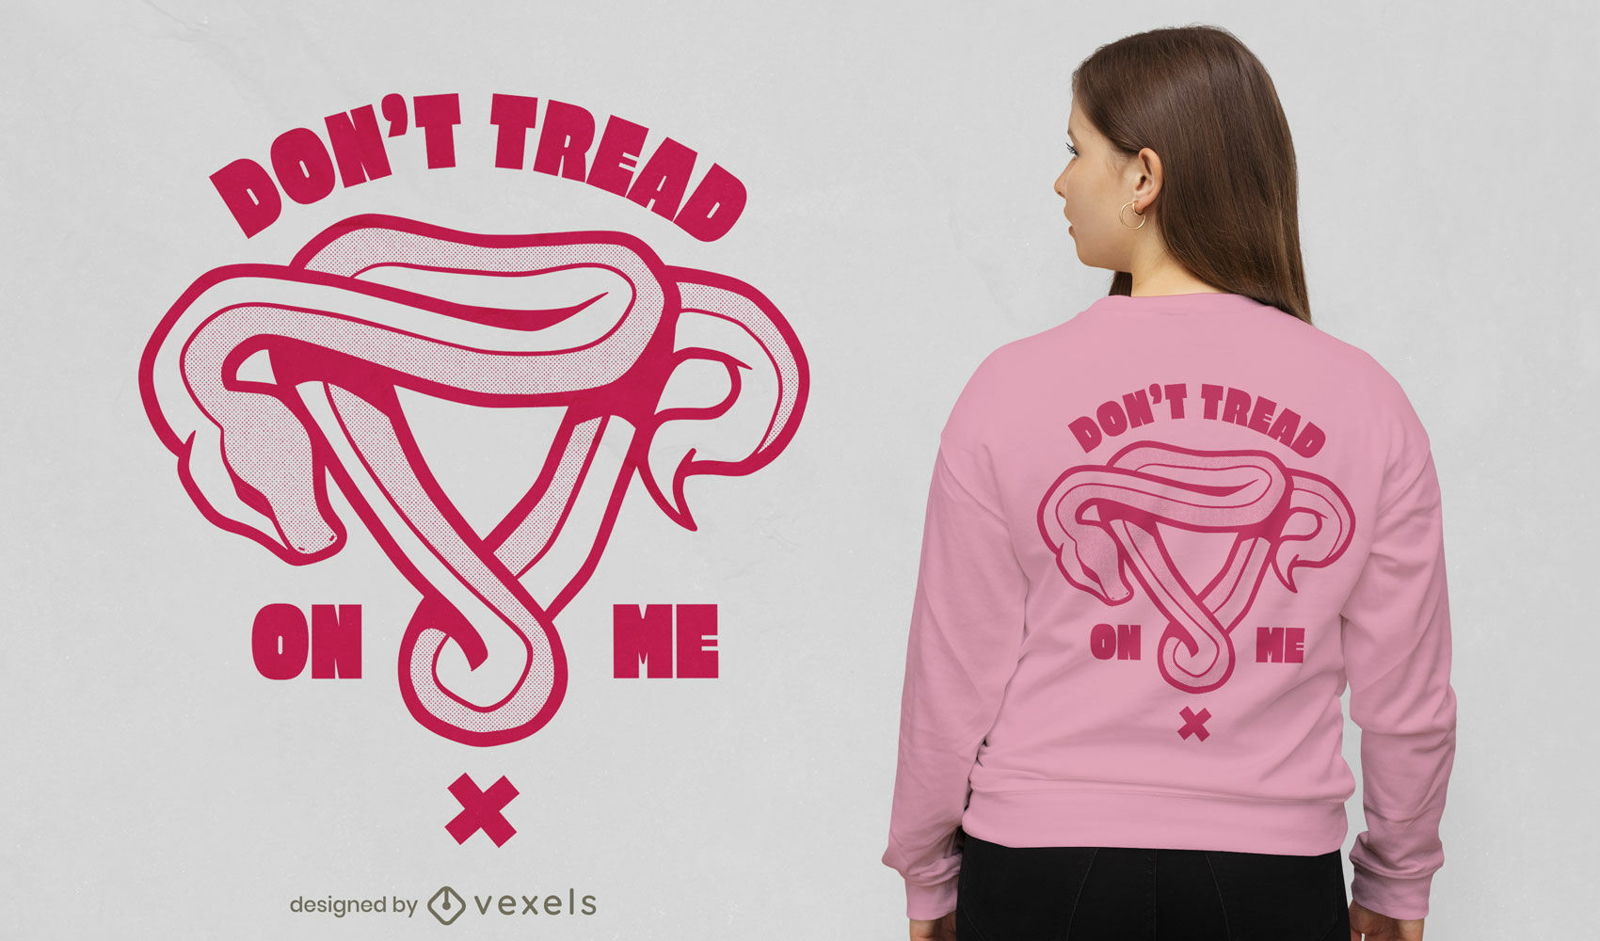 Snake uterus t-shirt design